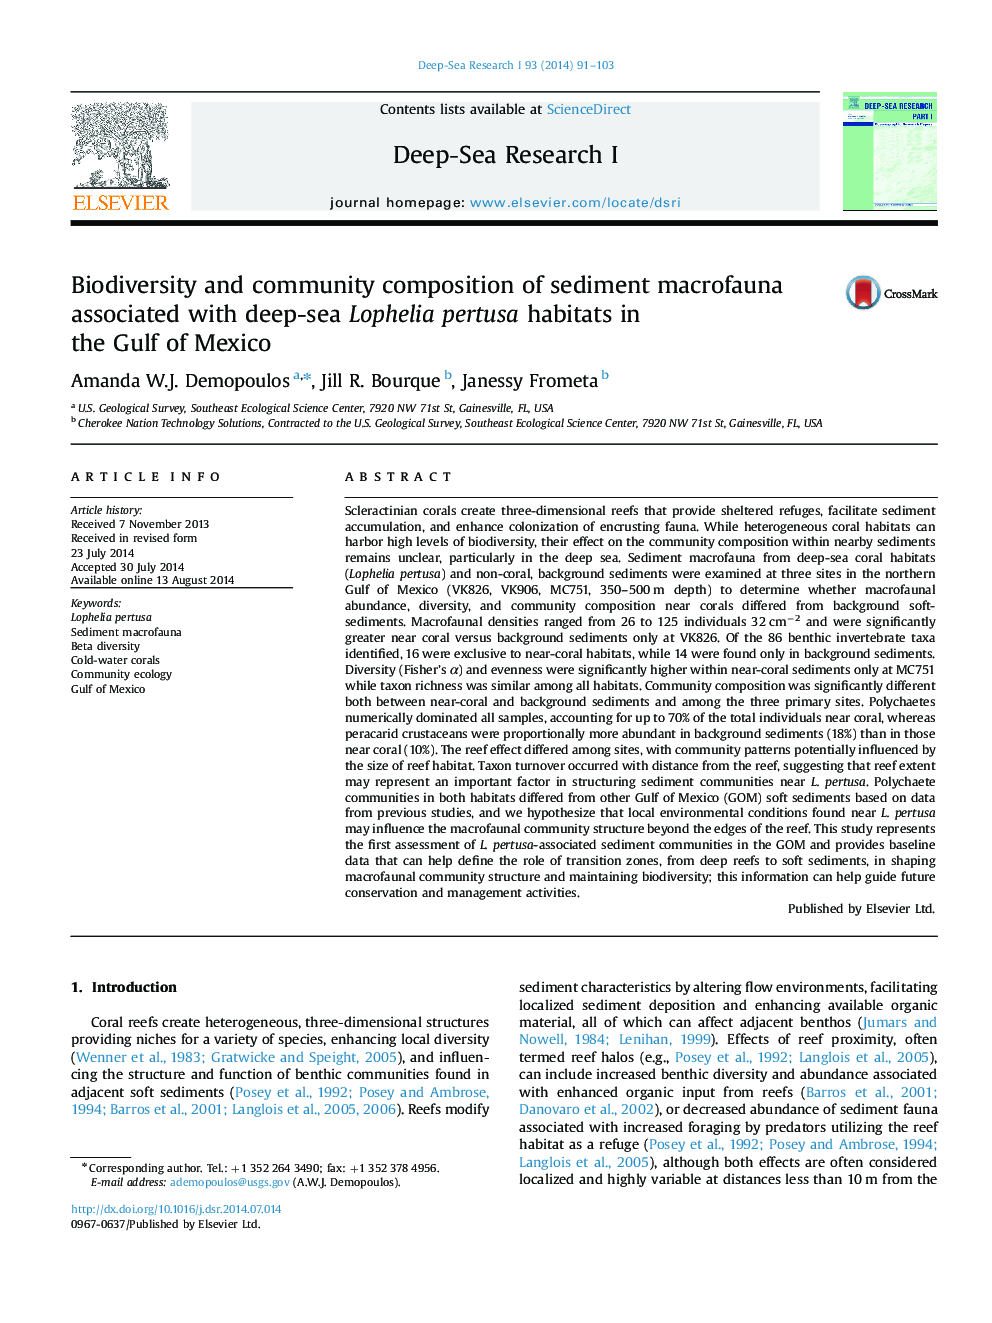 Biodiversity and community composition of sediment macrofauna associated with deep-sea Lophelia pertusa habitats in the Gulf of Mexico